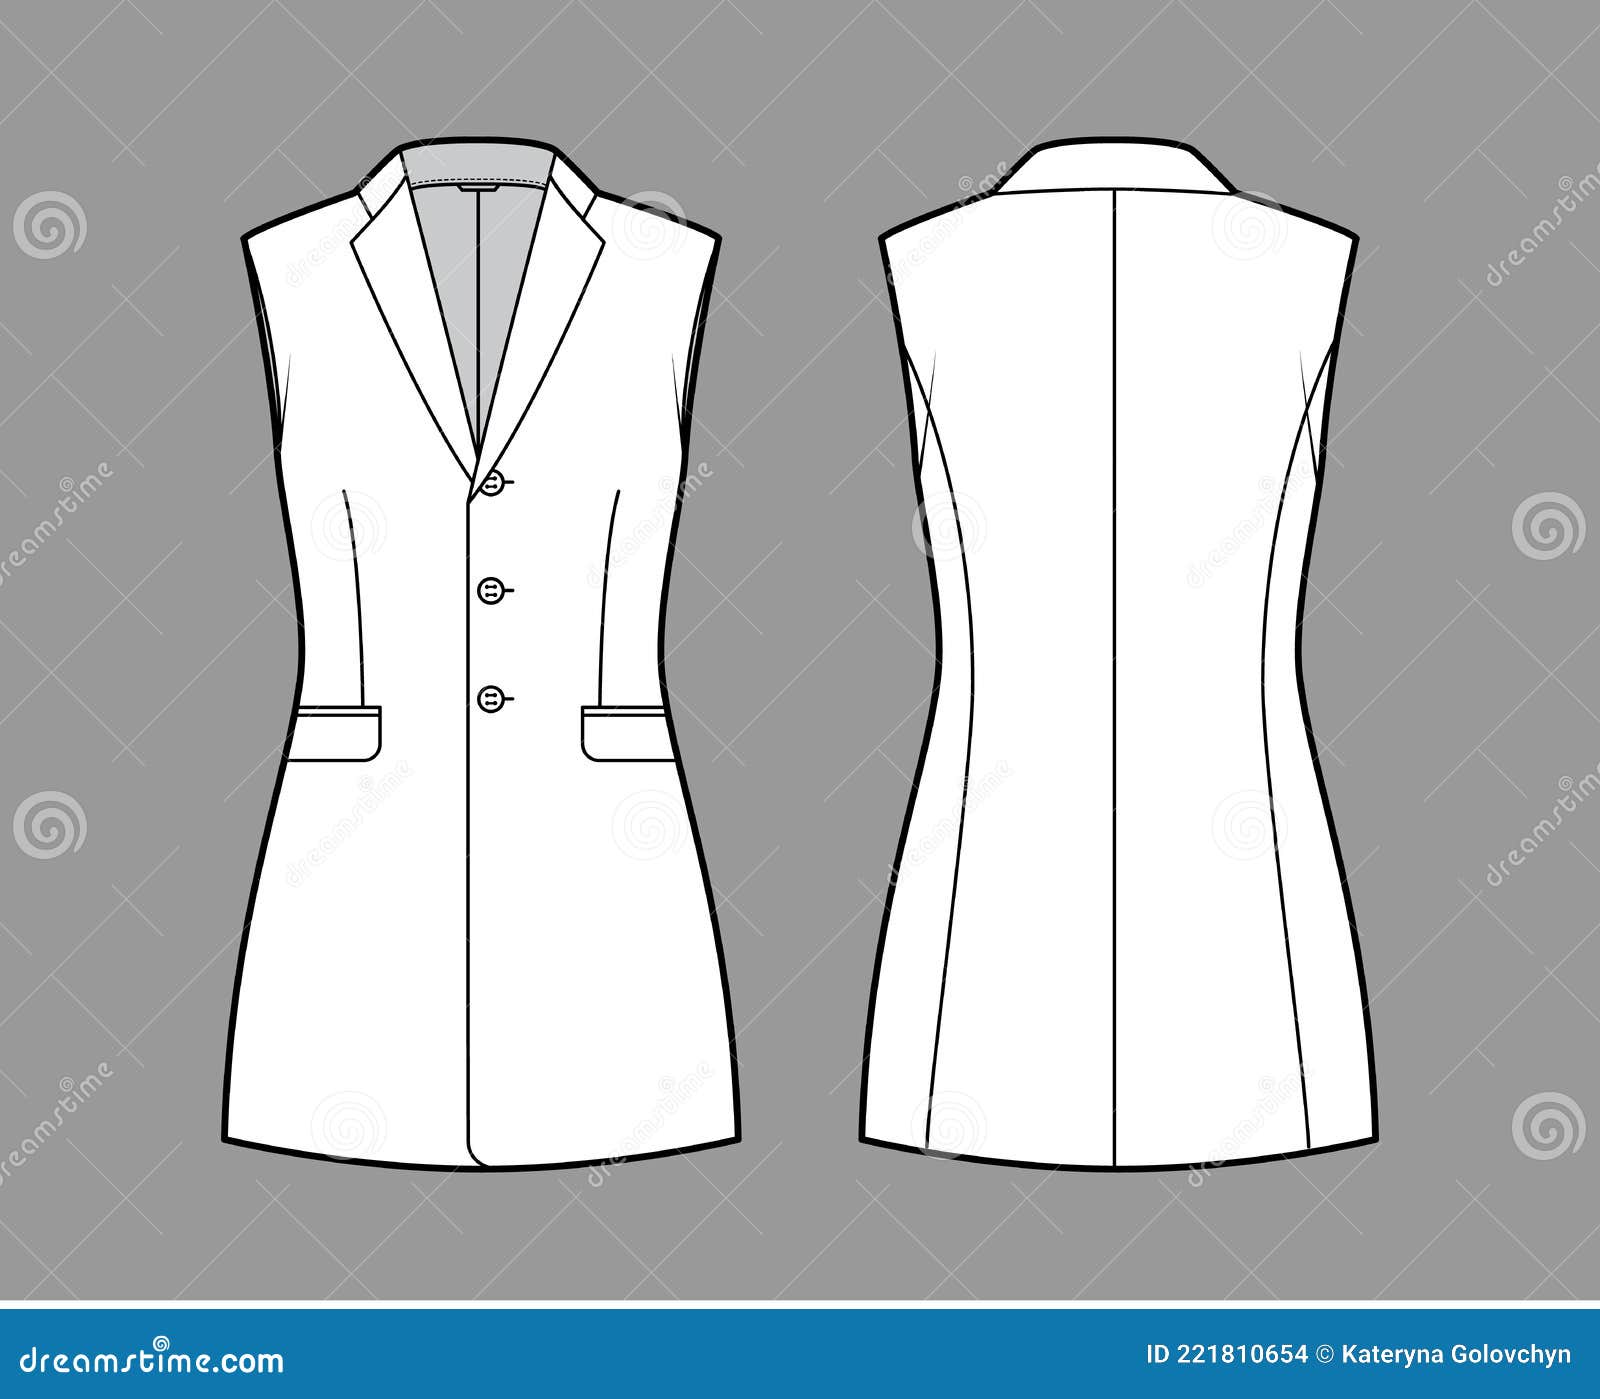 Design your waistcoat - Blugiallo - Tailoring reinvented